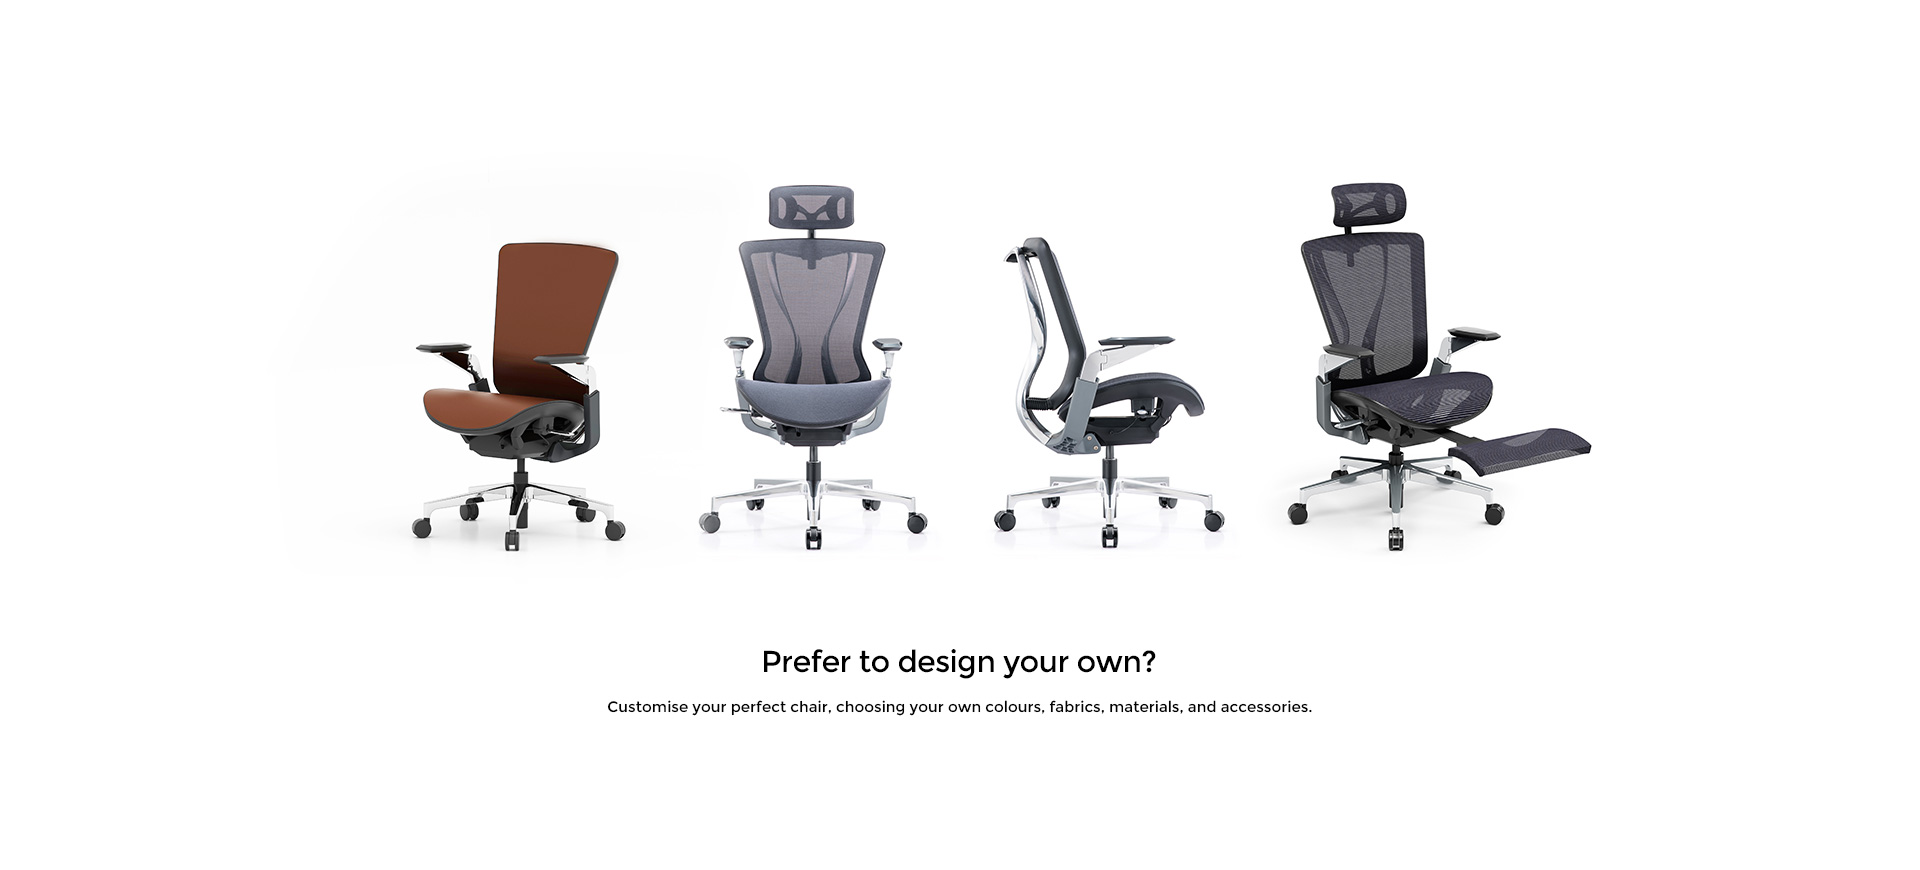 ergonomic chair,swivel office chair,office chair furniture